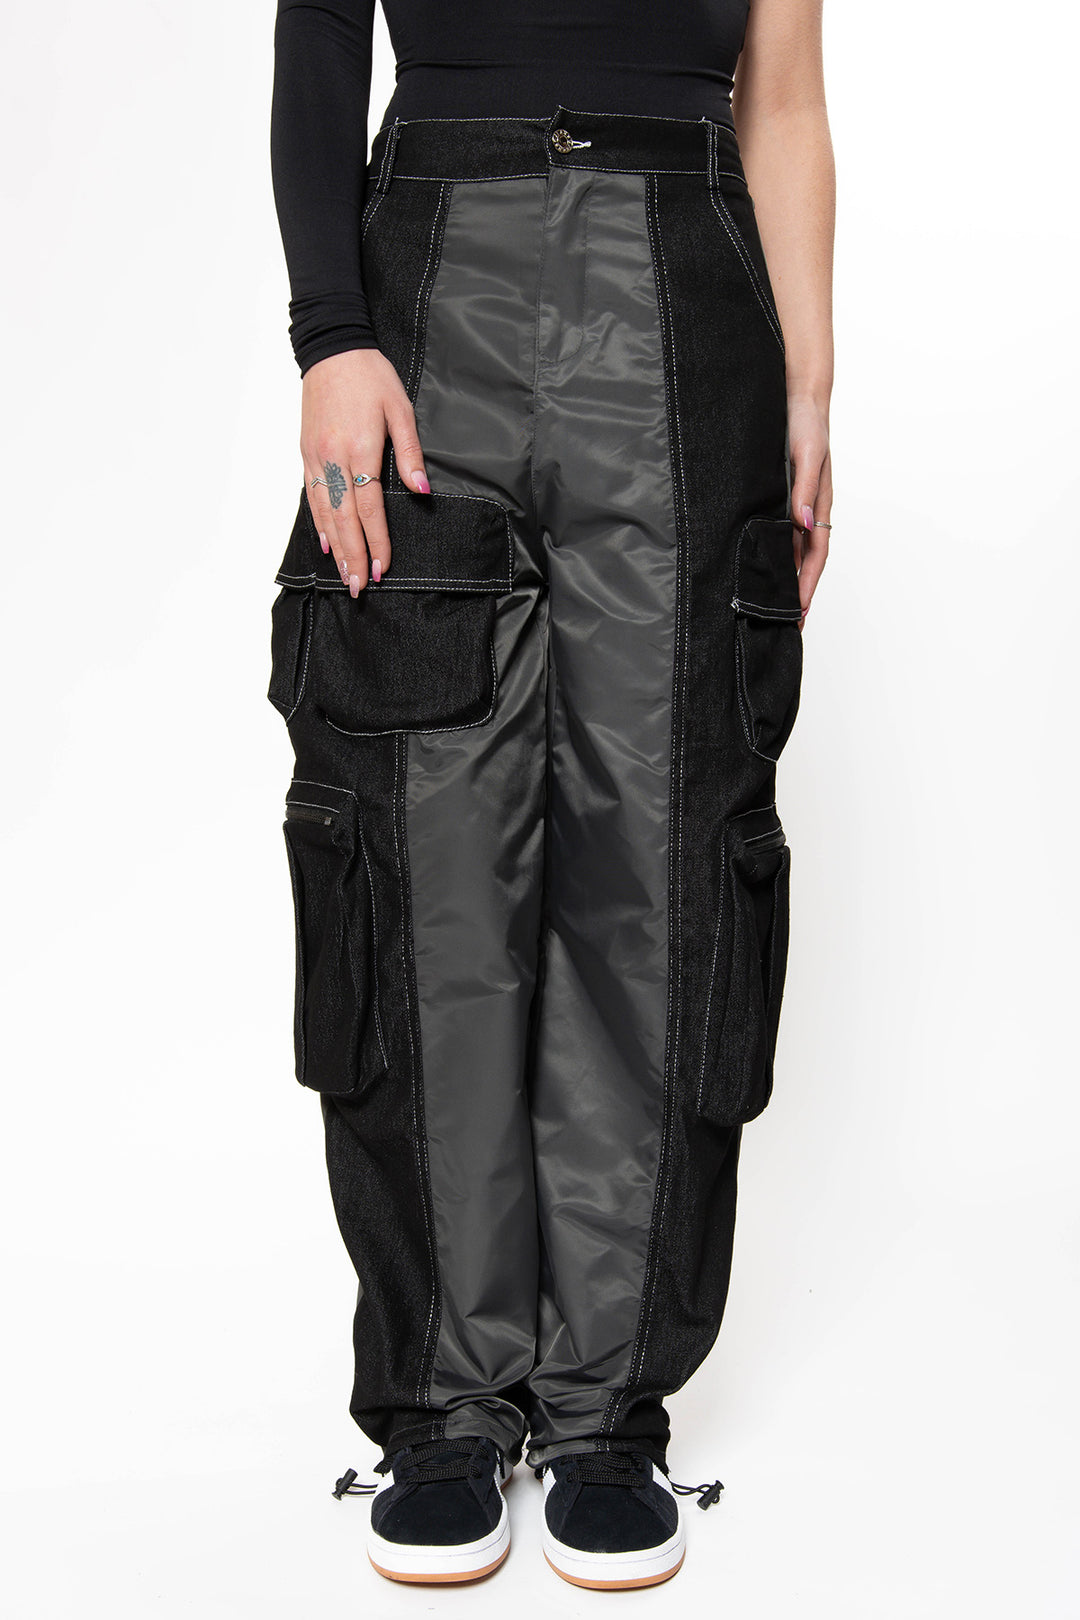 Willow Cargo Parachute Pants - Grey Pants Routines Fashion   